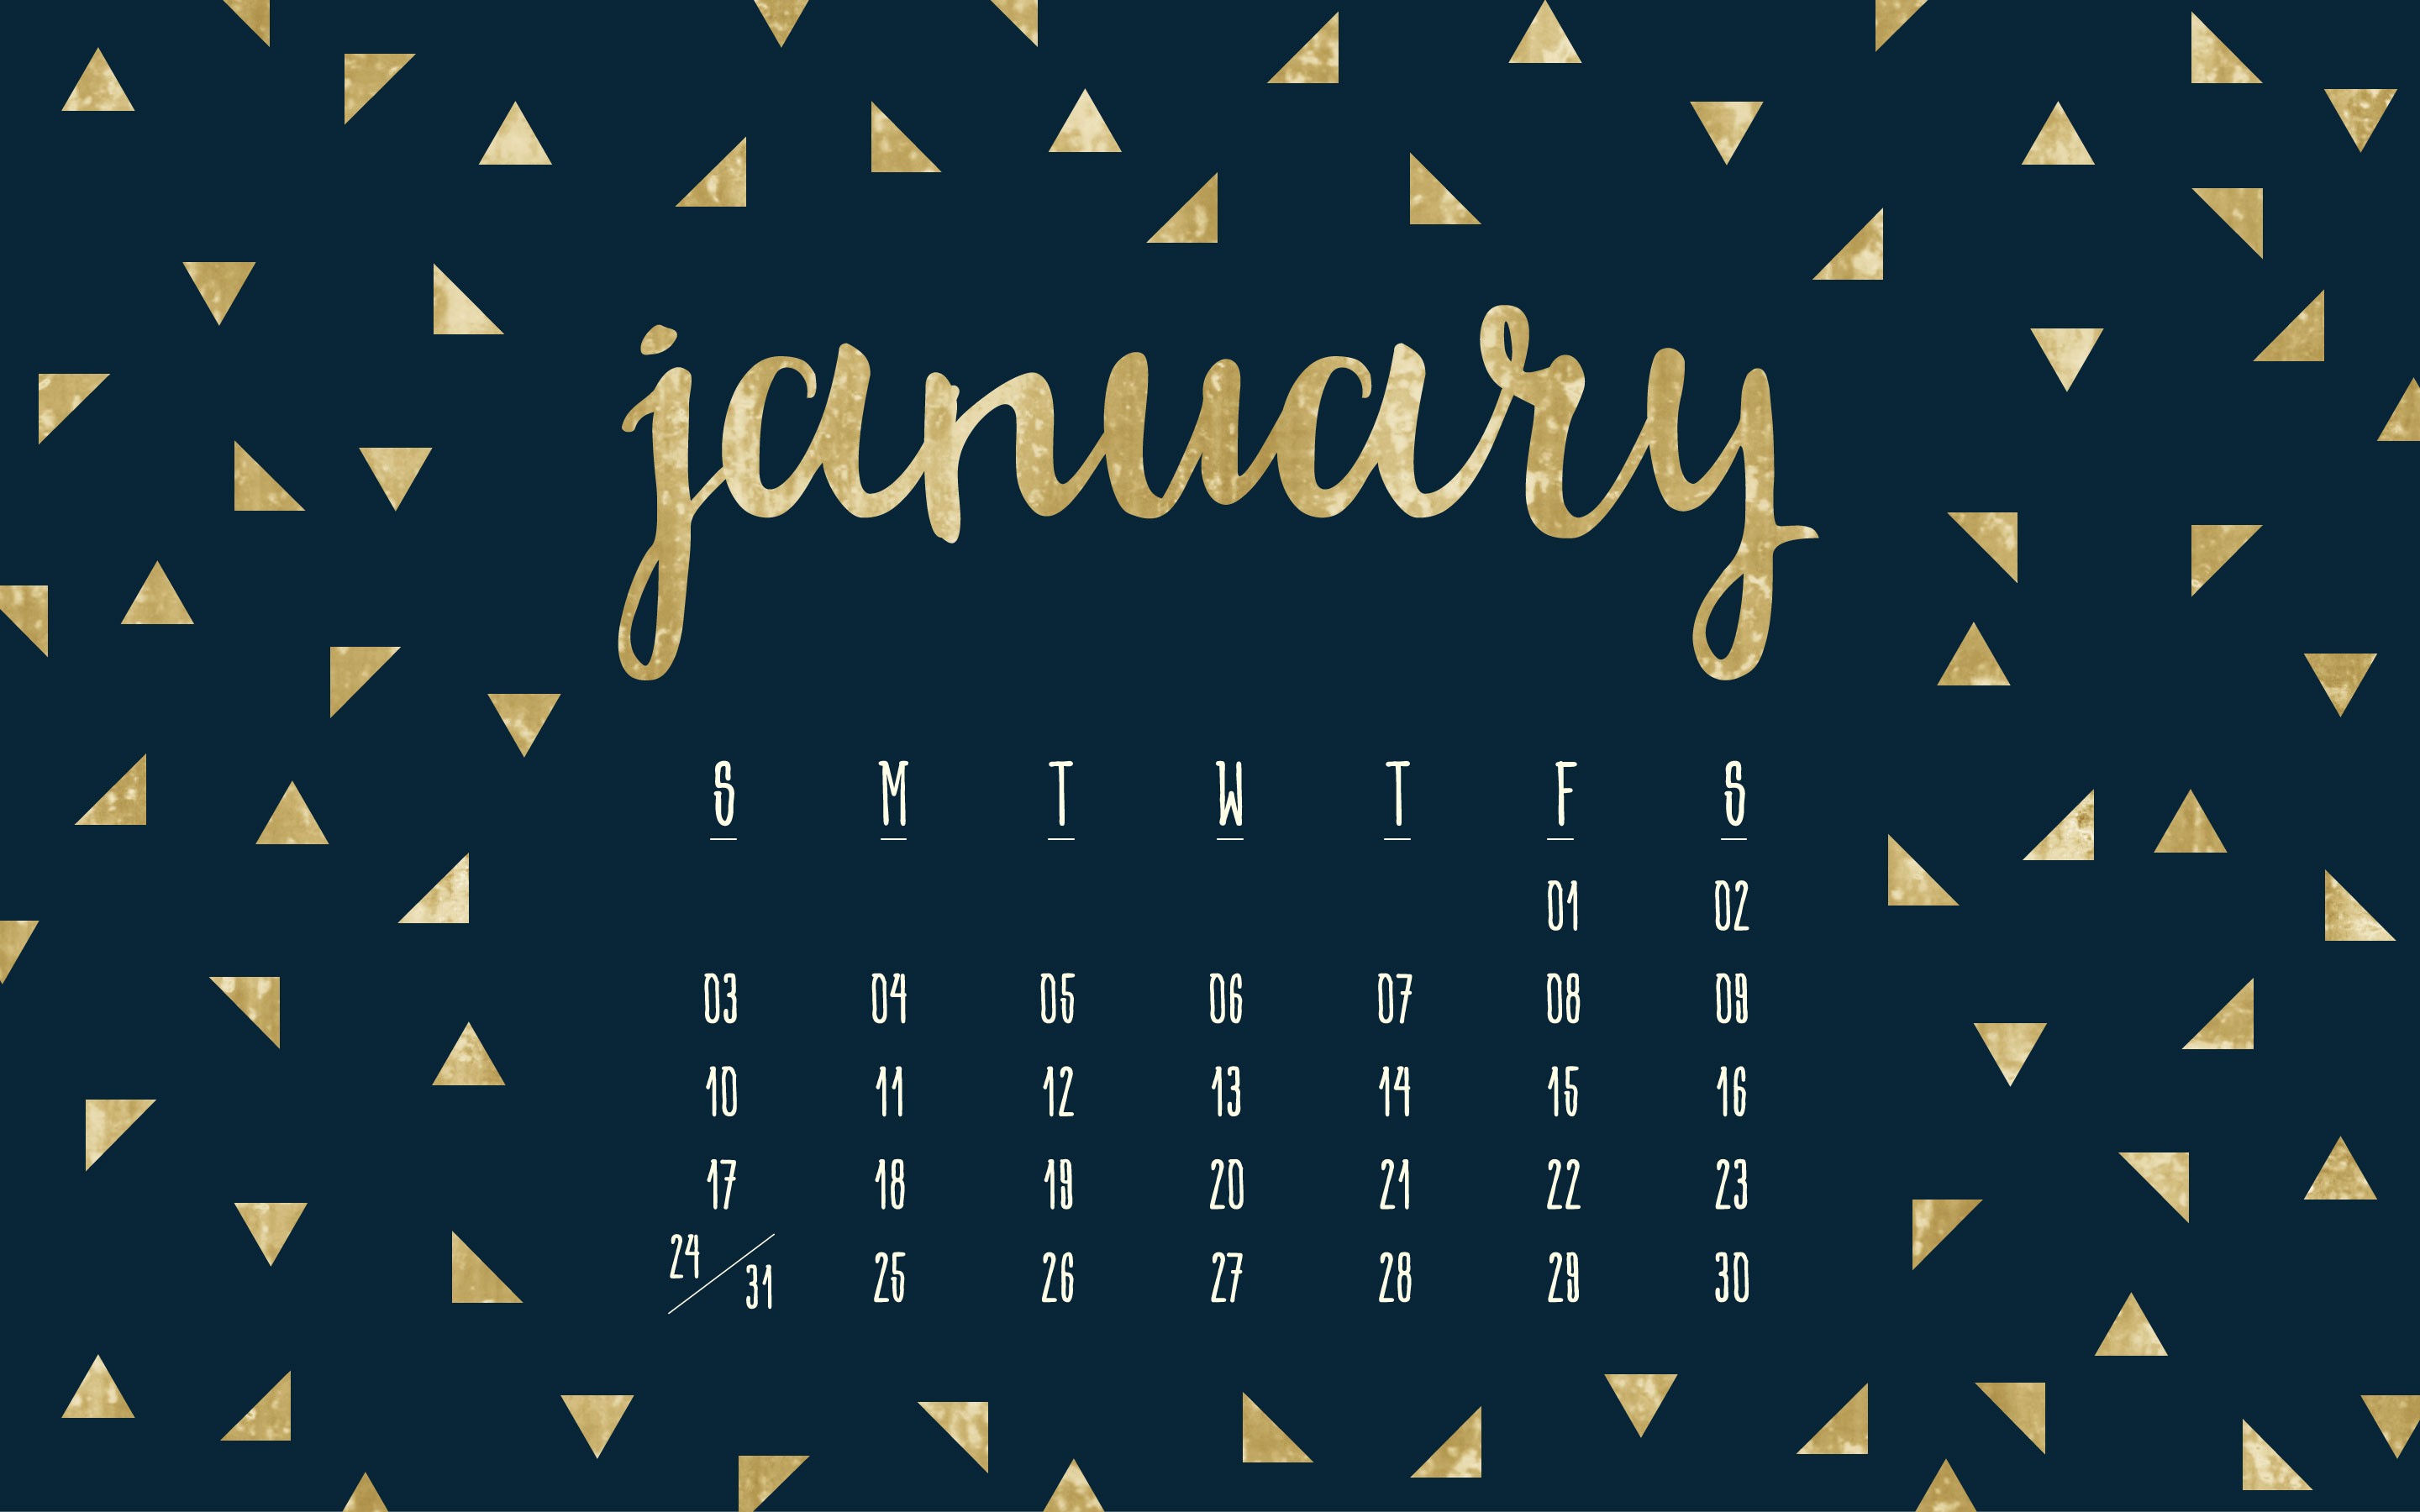 Aesthetic January 2021 Calendar Desktop Wallpaper Men Periodis